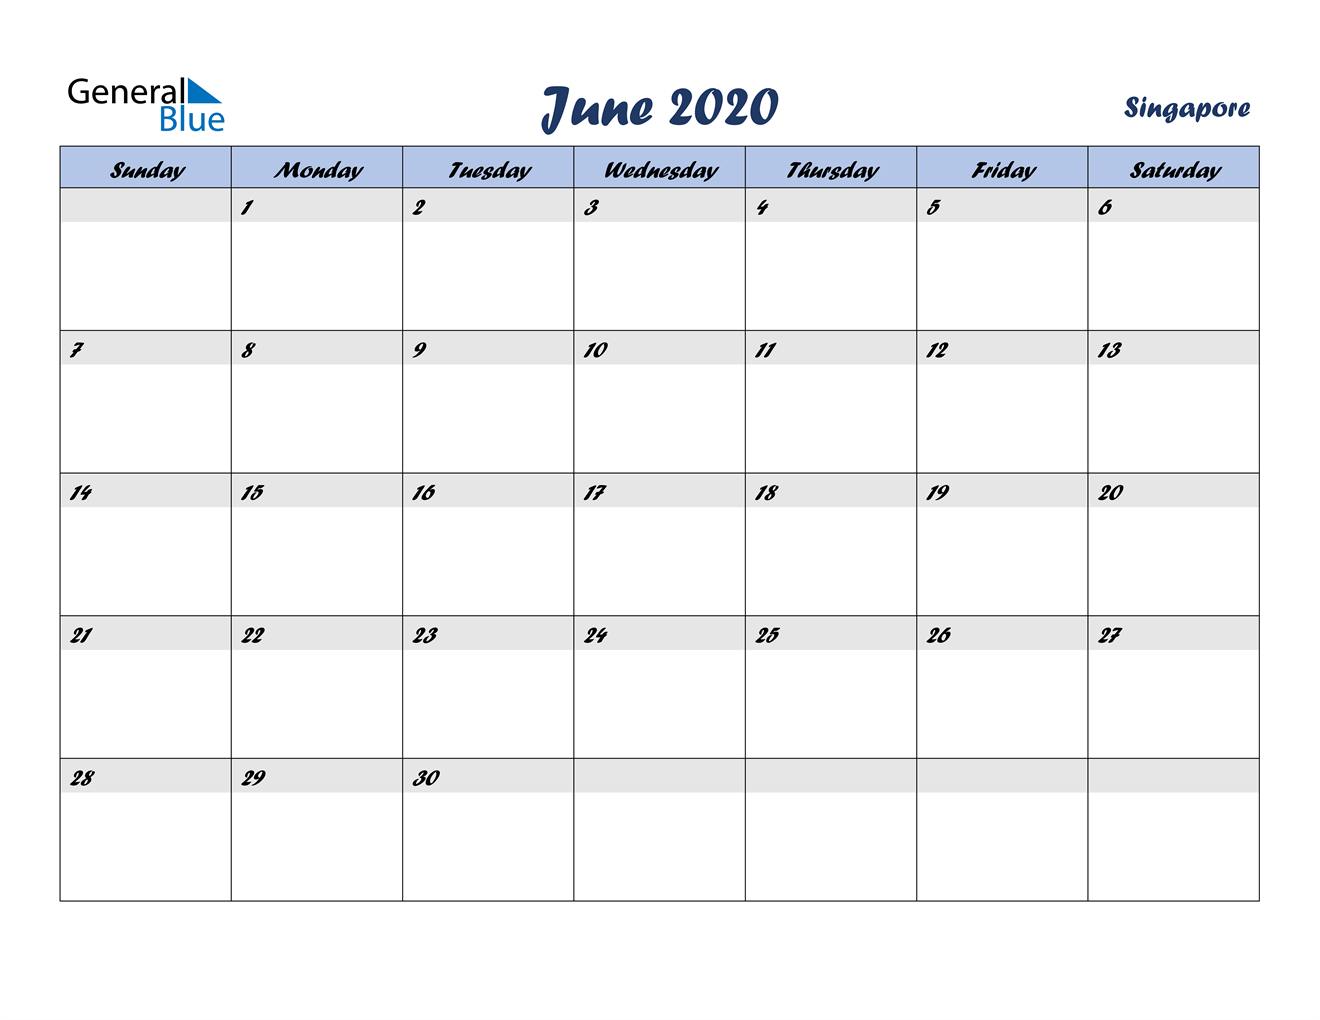 June 2020 Calendar - Singapore